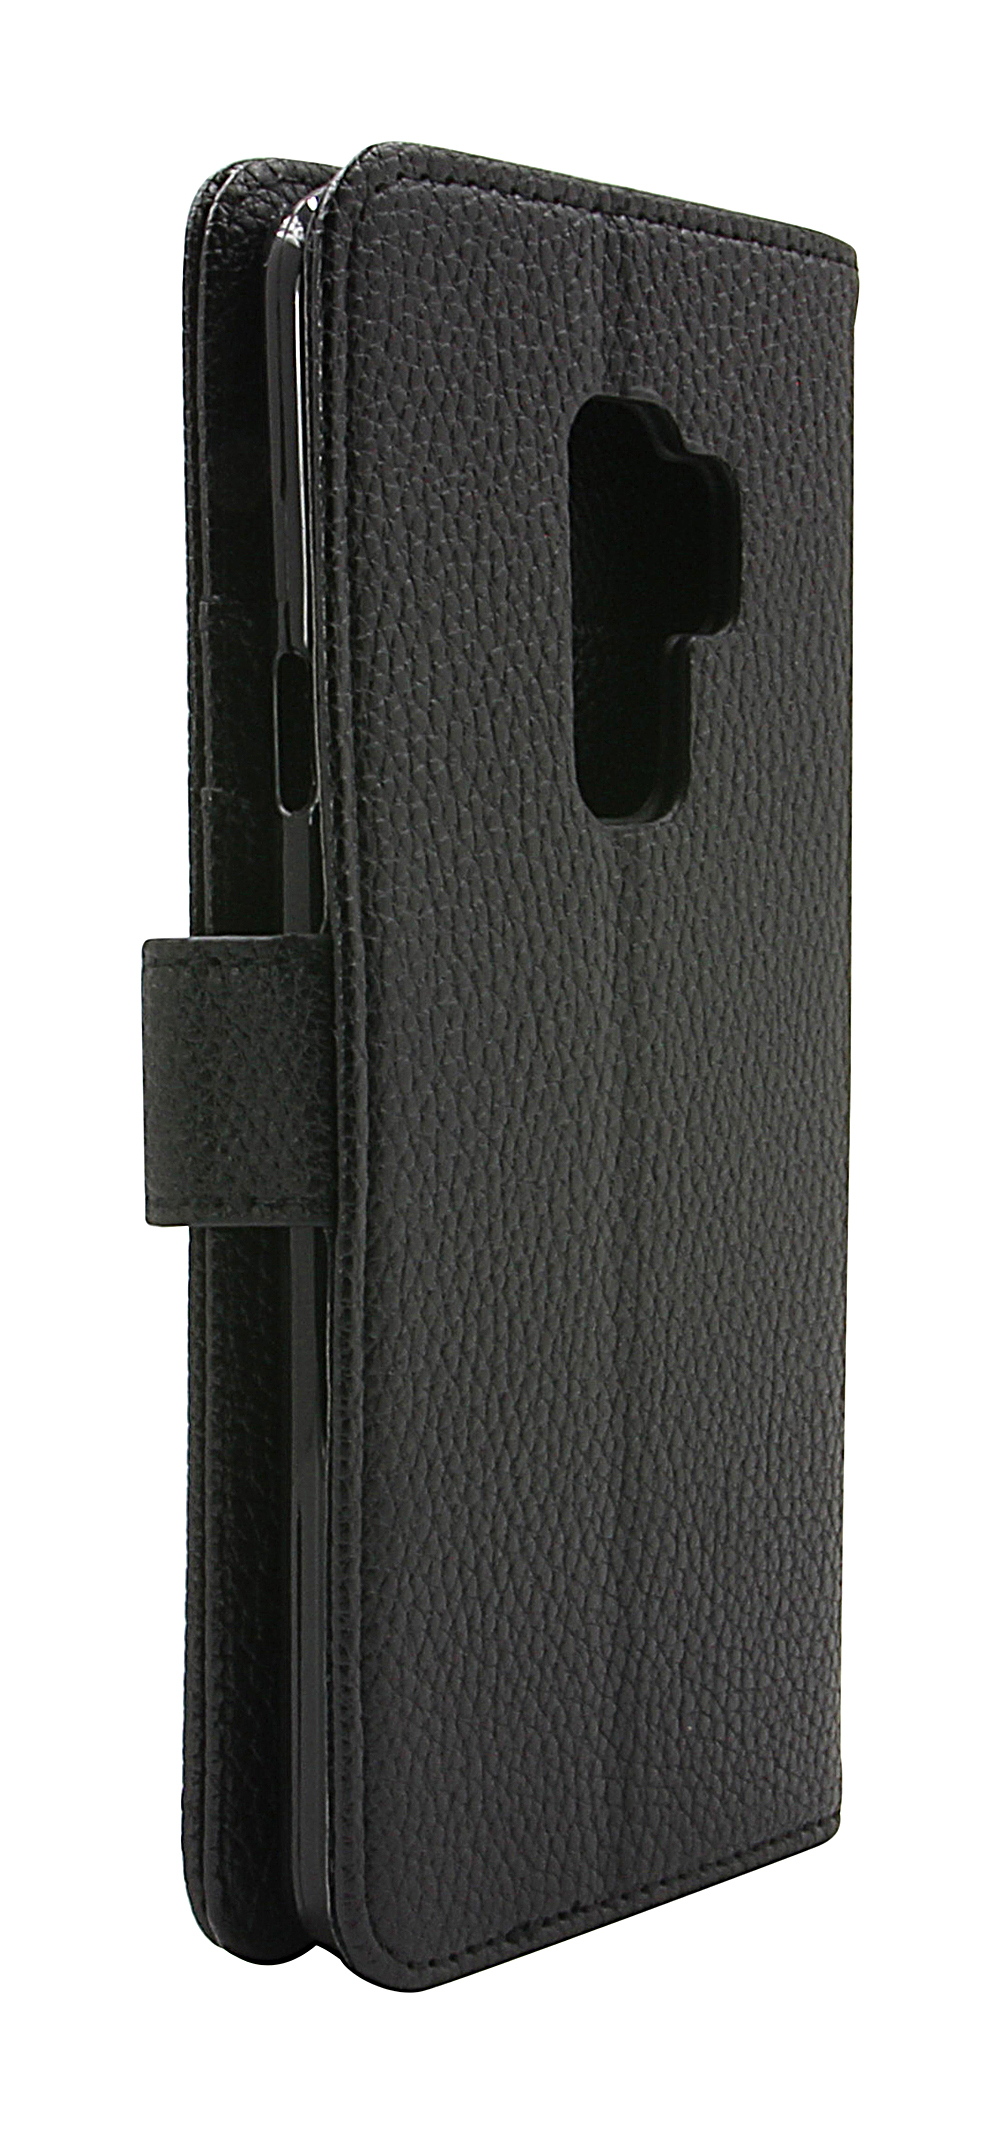 billigamobilskydd.seNew Standcase Wallet Samsung Galaxy S9 Plus (G965F)